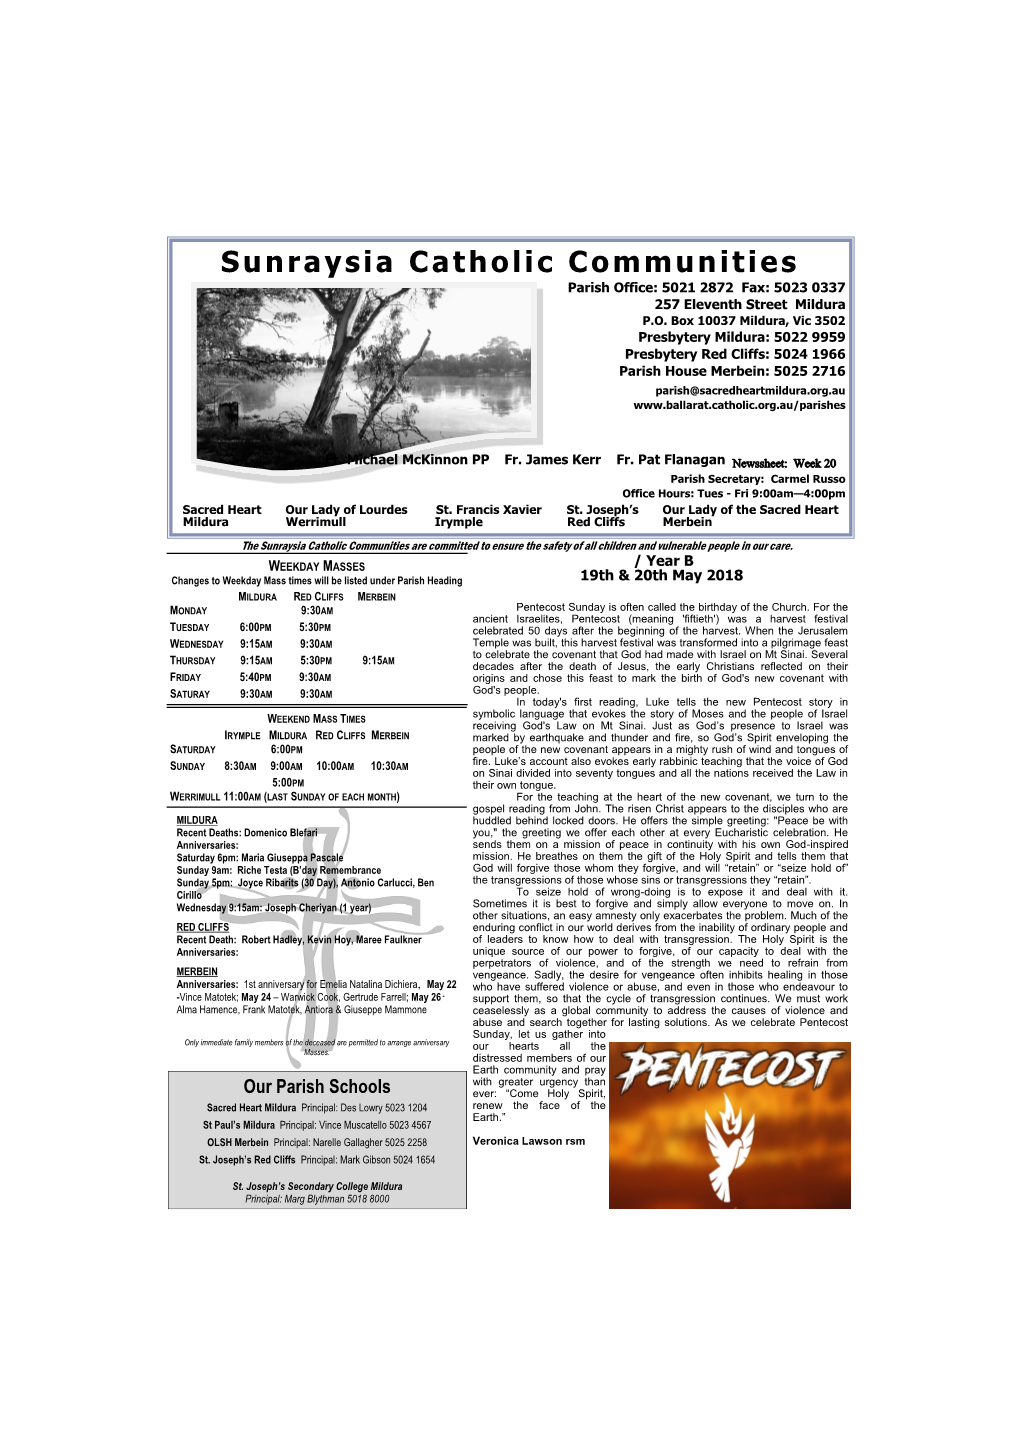 Sunraysia Catholic Communities Parish Office: 5021 2872 Fax: 5023 0337 257 Eleventh Street Mildura P.O